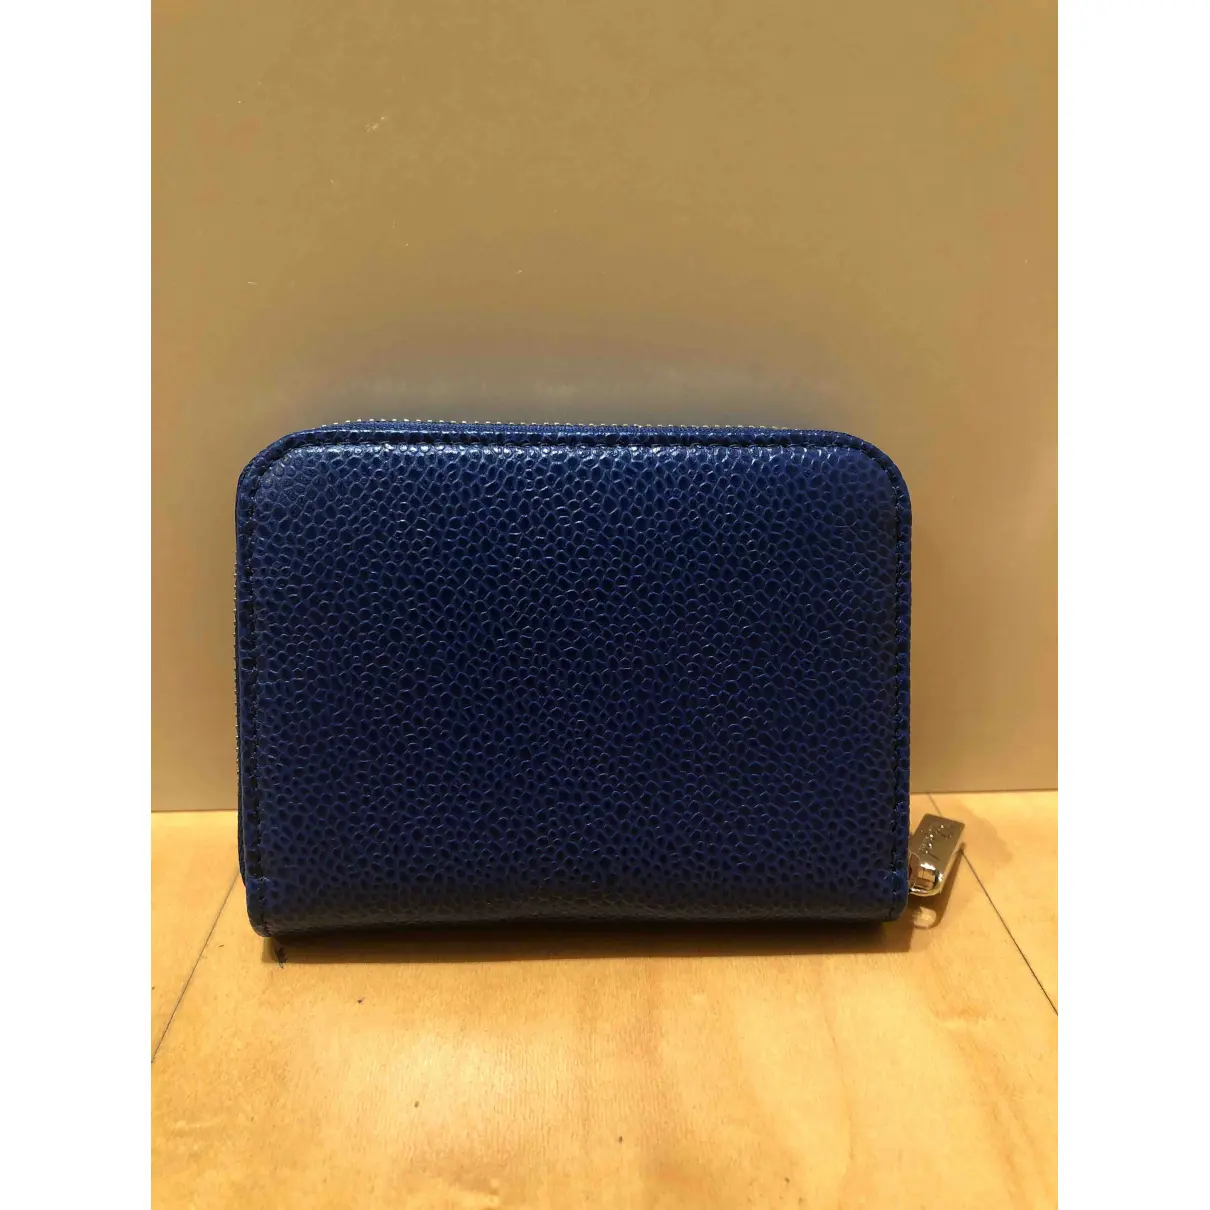 Buy Chopard Leather purse online